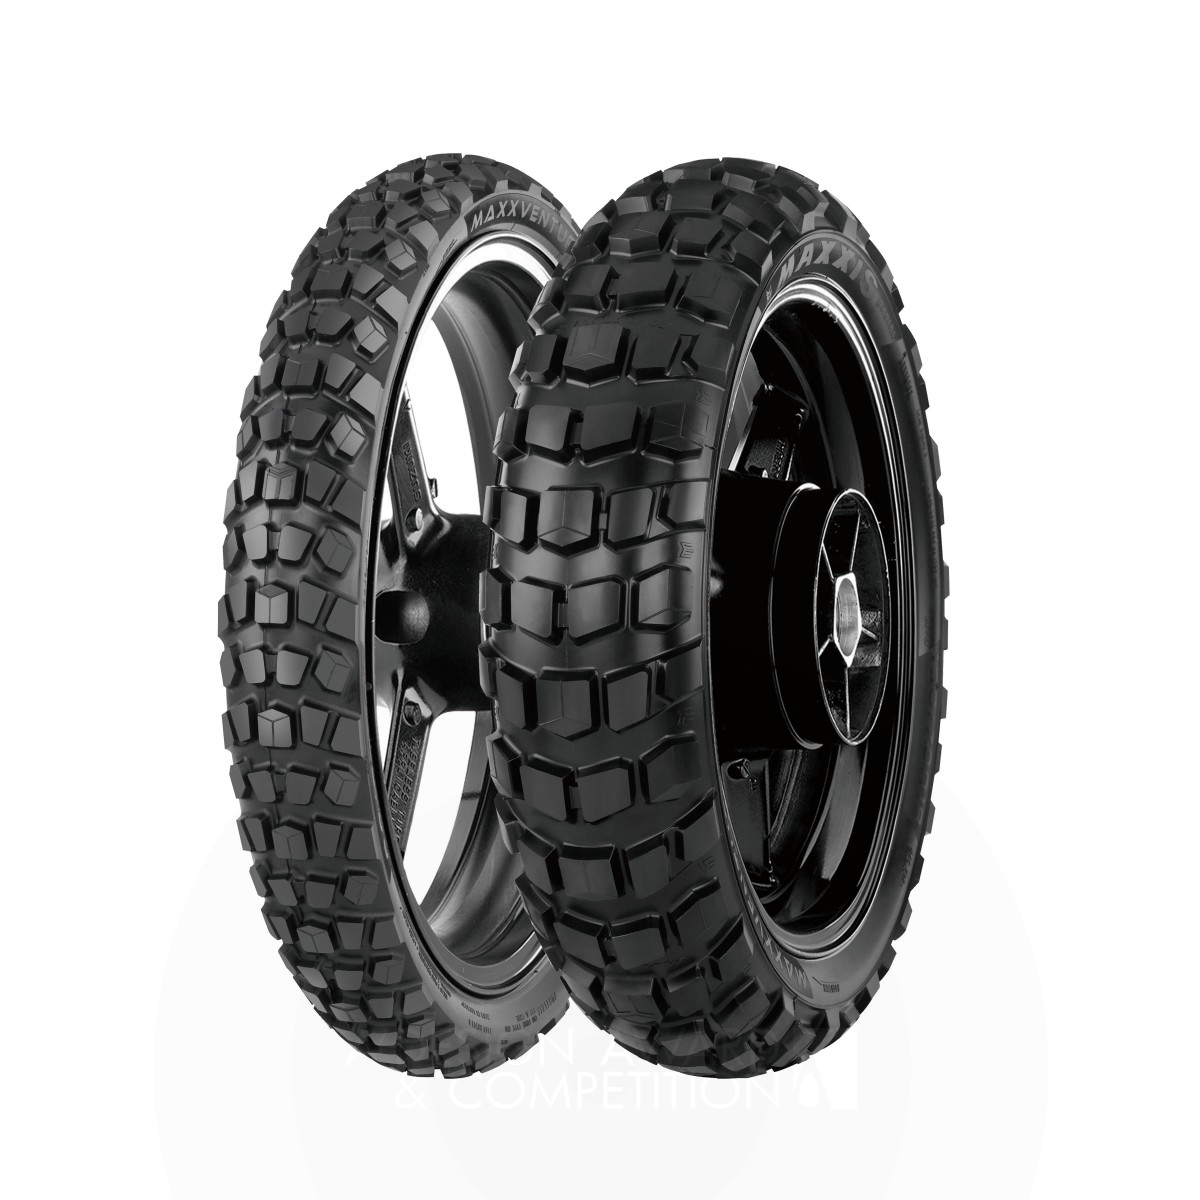 Cheng Shin Rubber IND.Co., Ltd. Innovative Reusable Adventure Tire